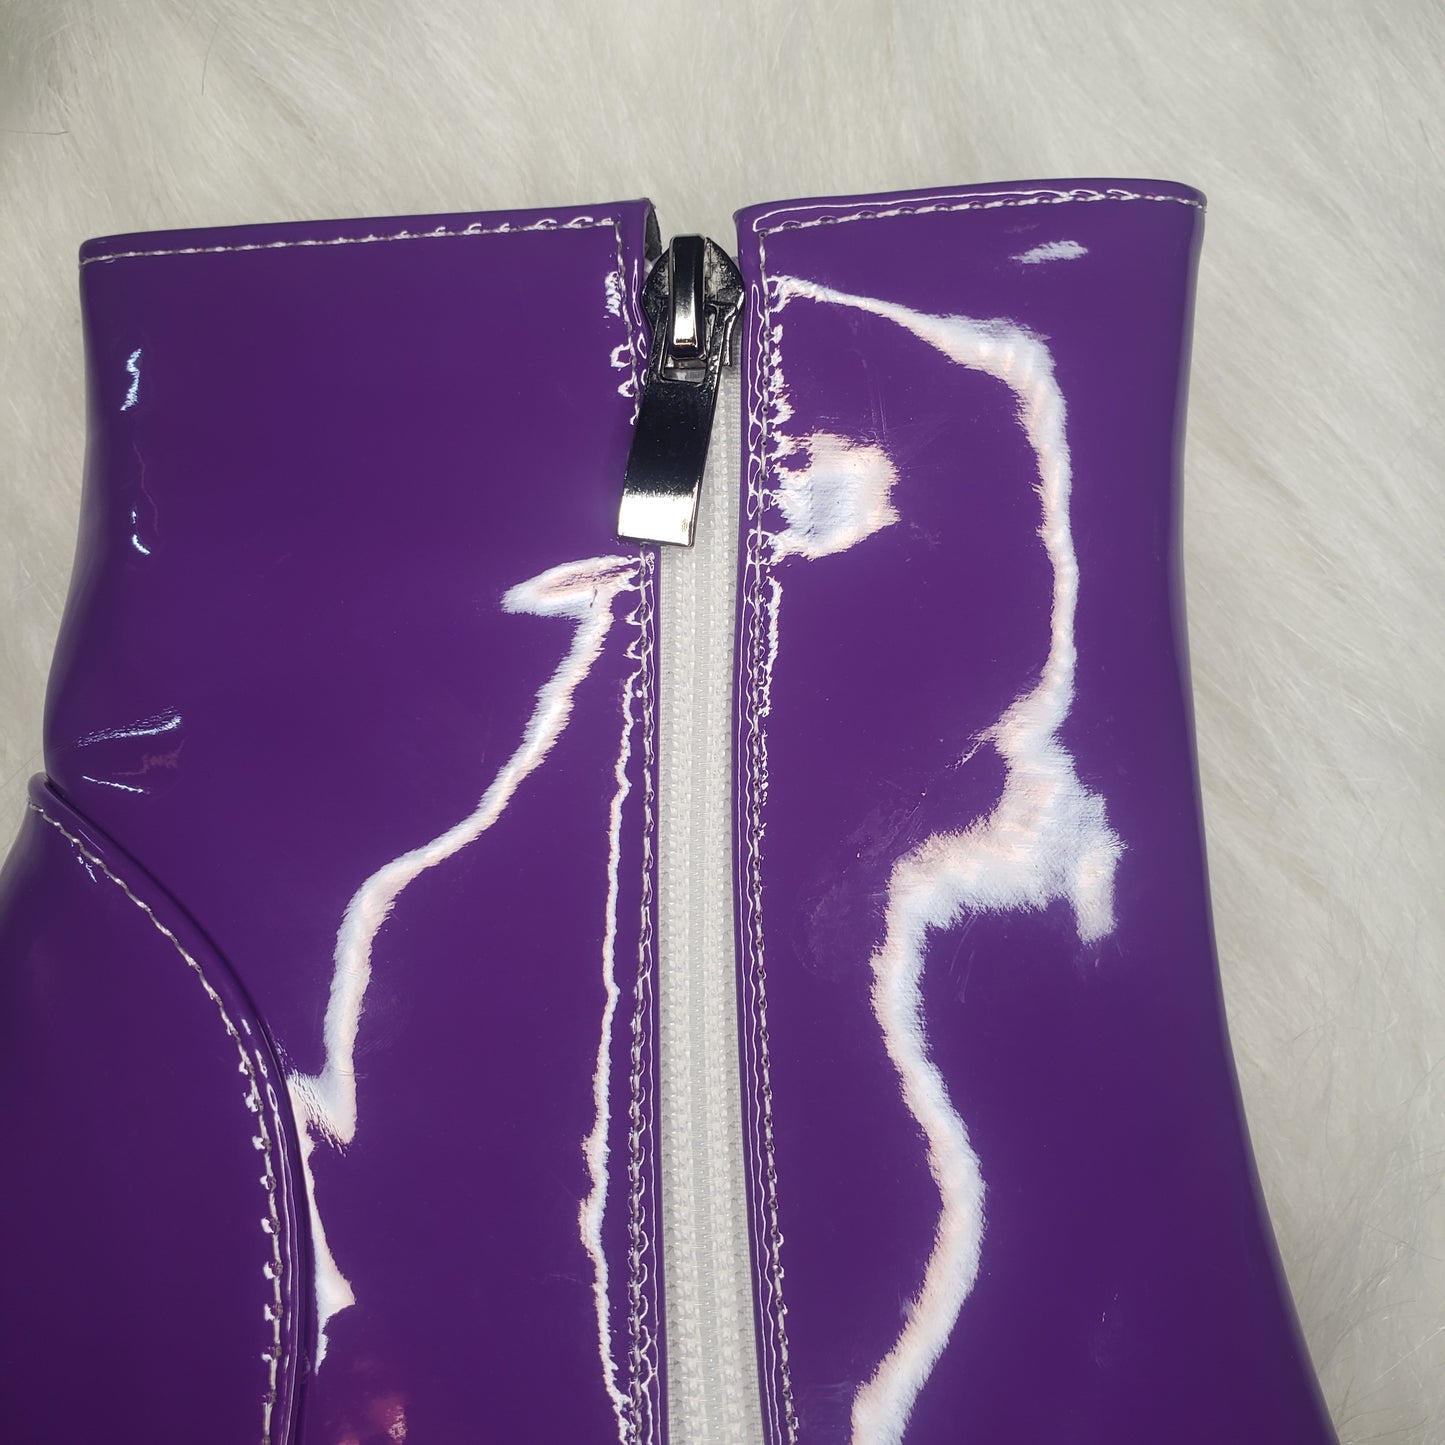 Purple Platform Patent Leather Ankle Go-go Boots